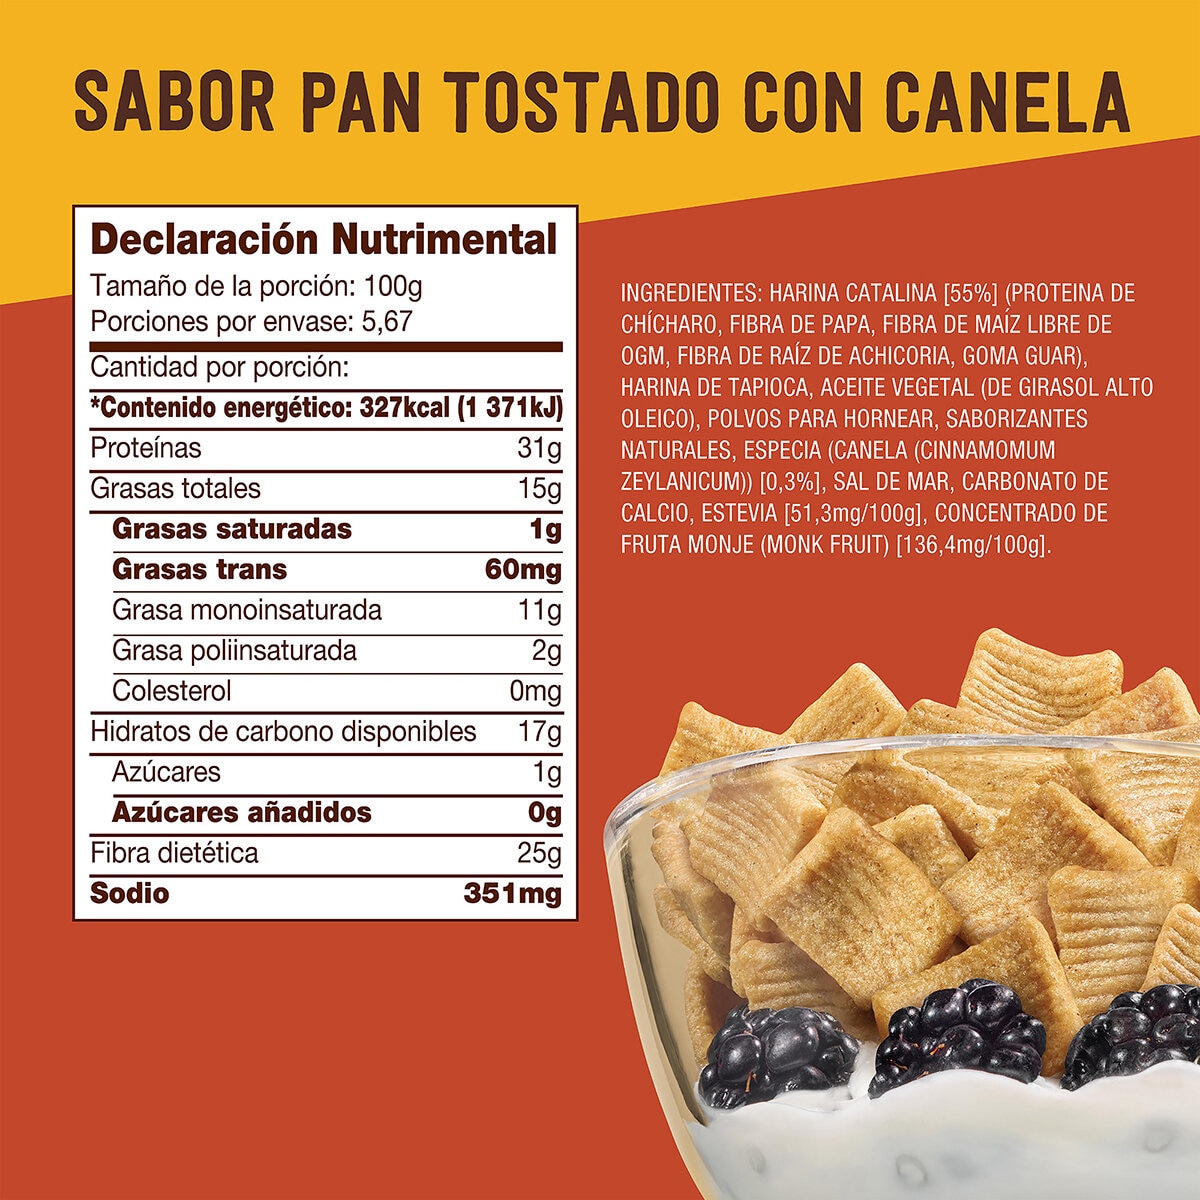 Catalina Crunch Cereal Keto Sabor Canela 567 gr